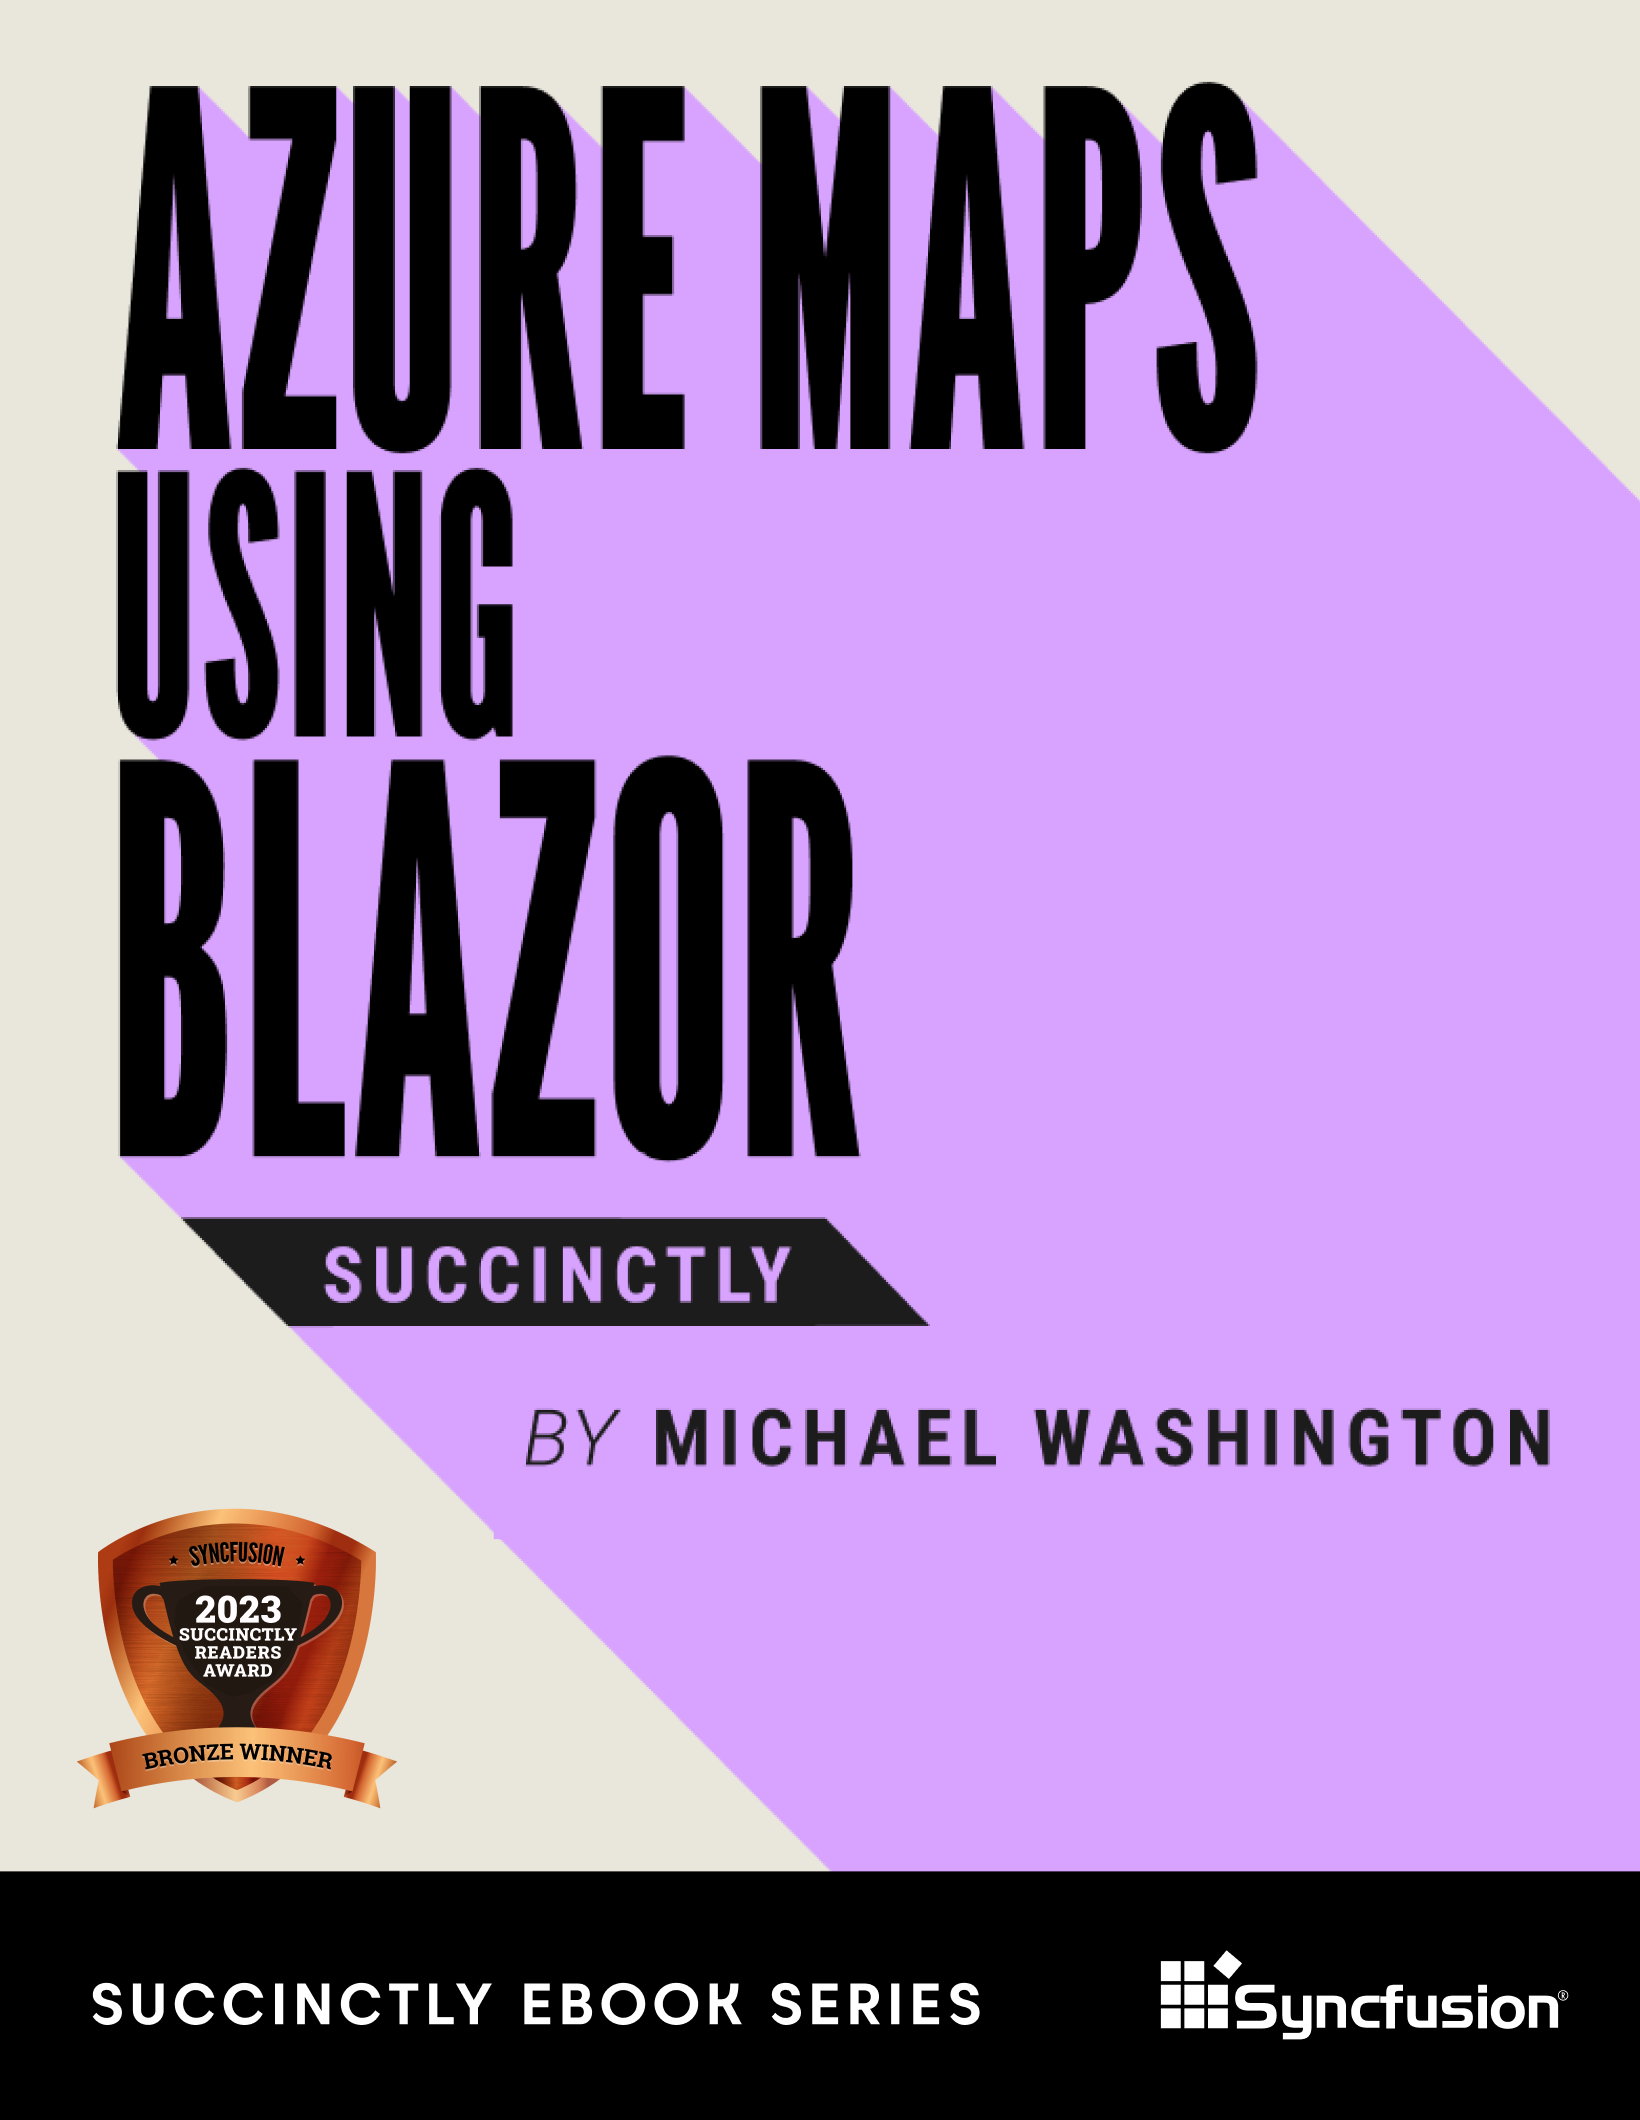 Azure Maps Using Blazor Succinctly Free eBook